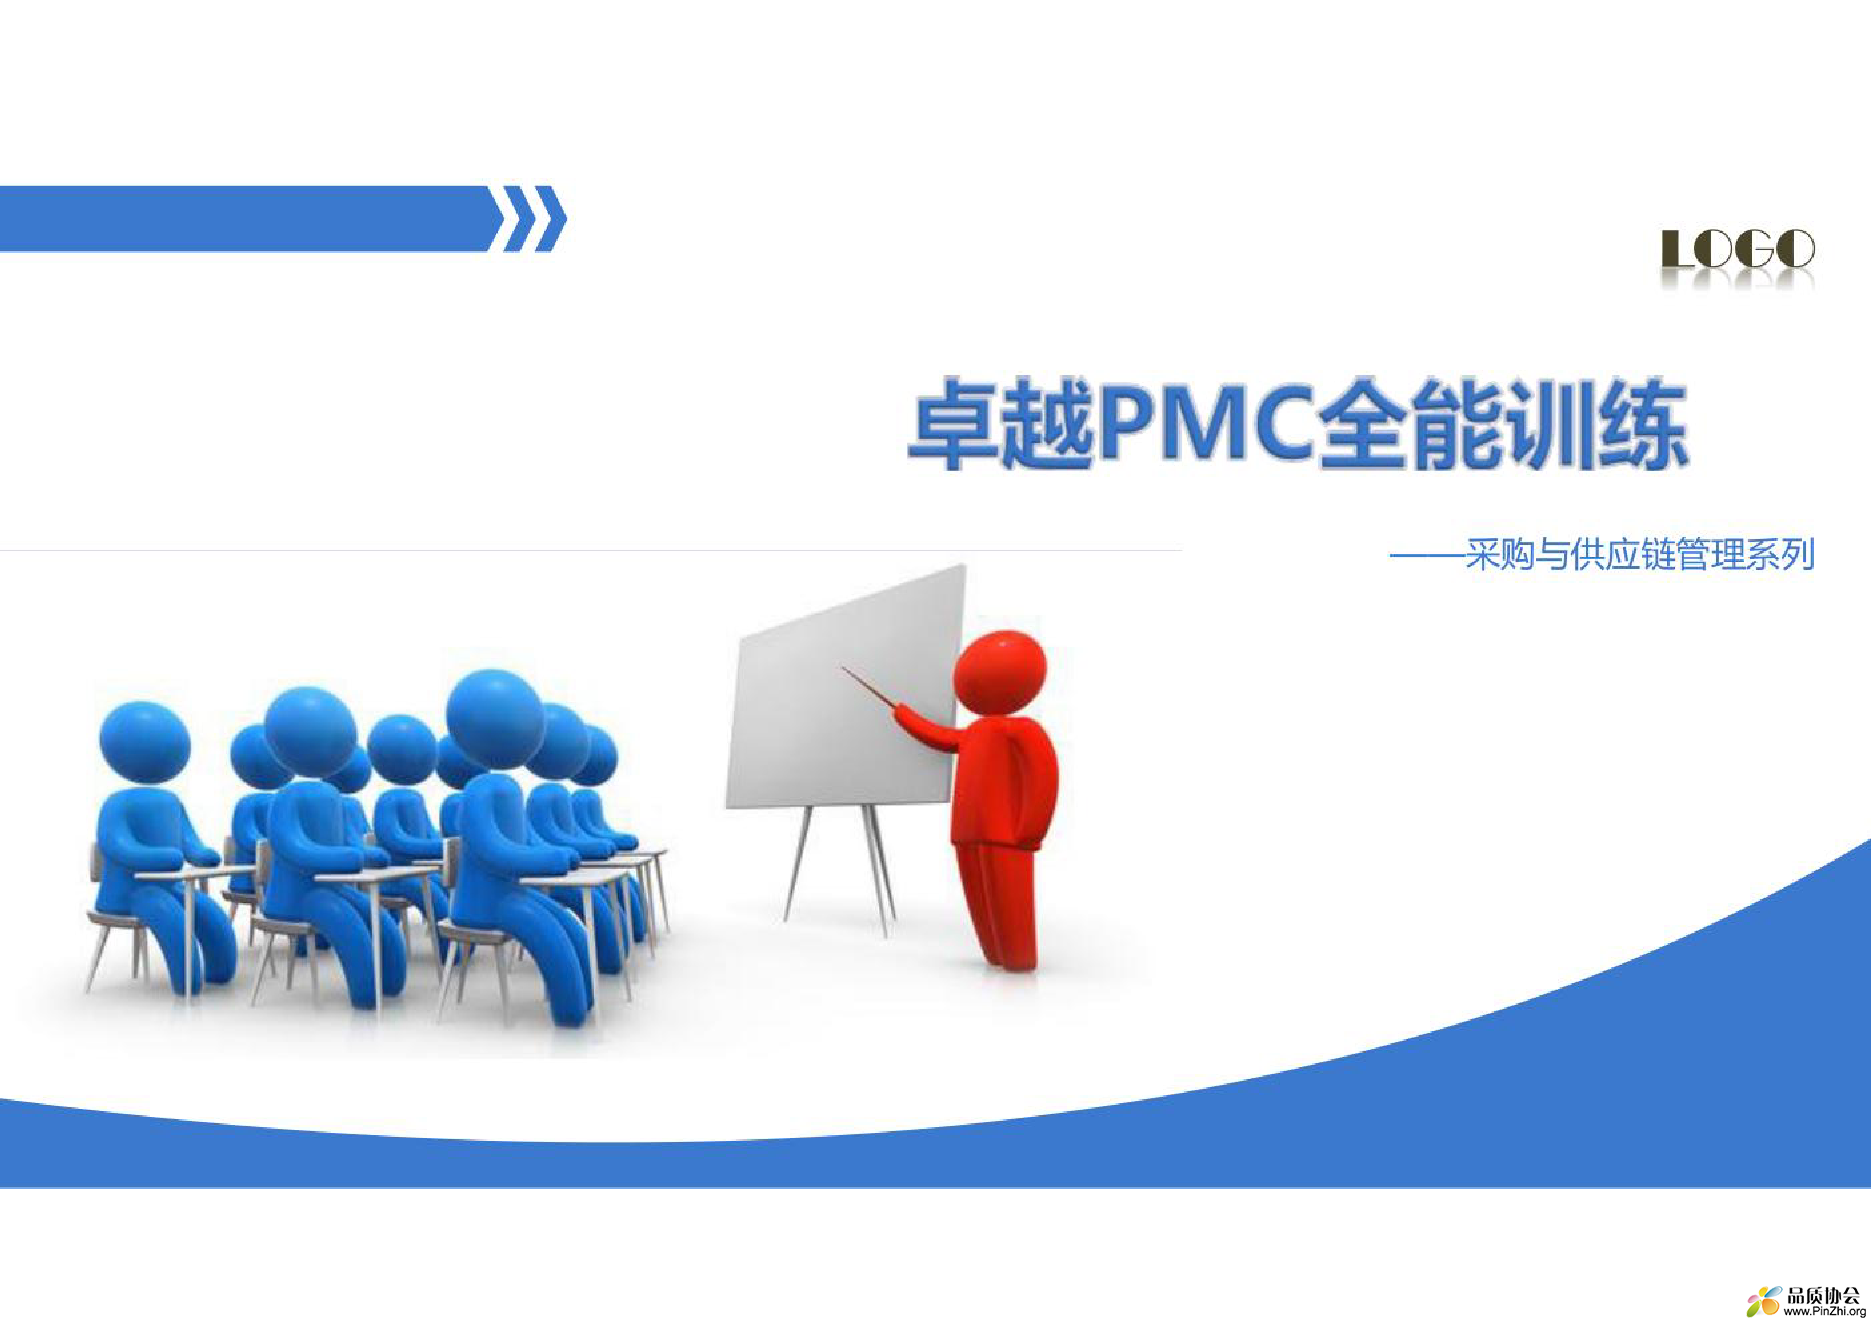 卓越PMC全能训练-001.png